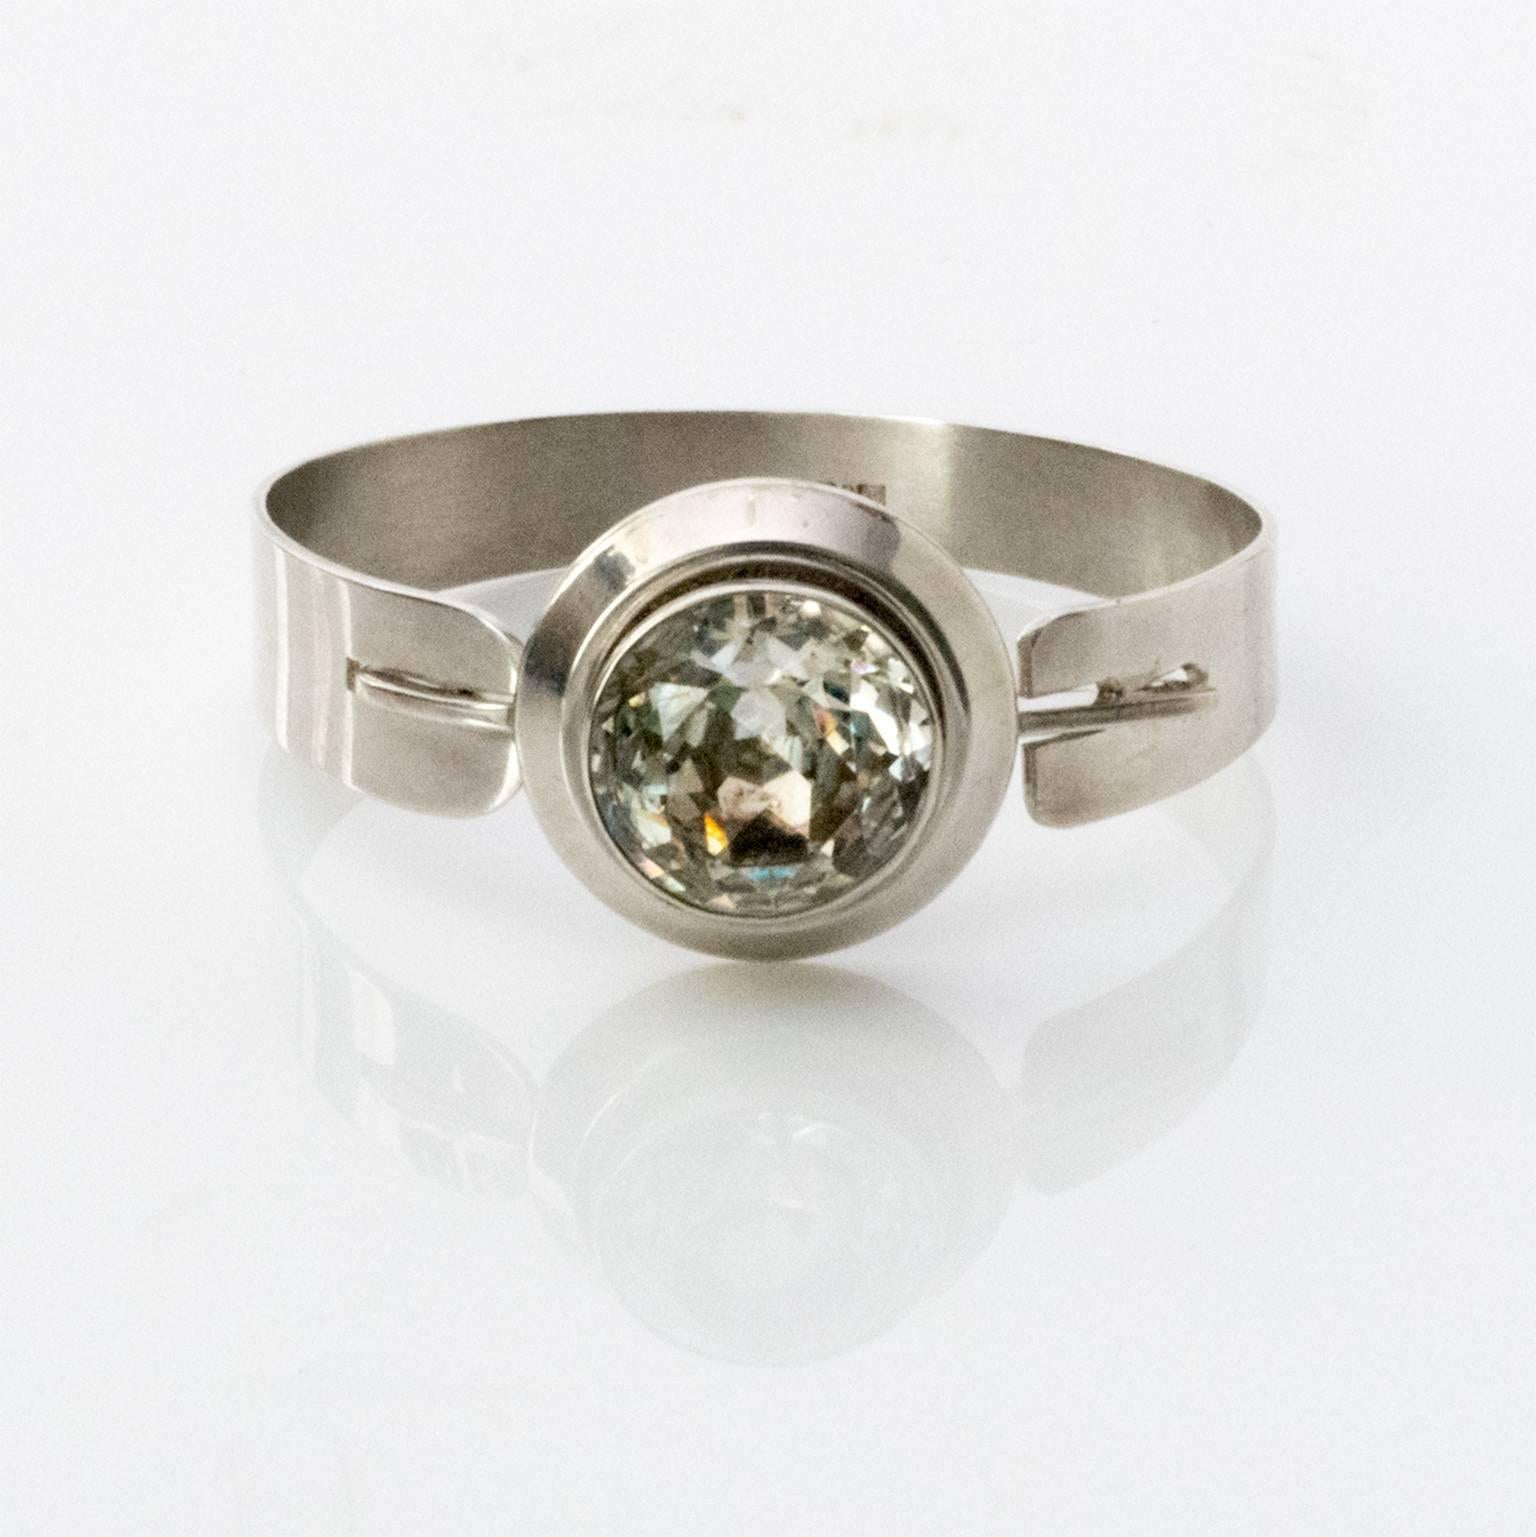 A Scandinavian Modern silver bracelet with mounted round faceted rock crystal. Designed by Georg Kaplan, Stockholm, Sweden, 1966s.
Measures: Diameter 2.25